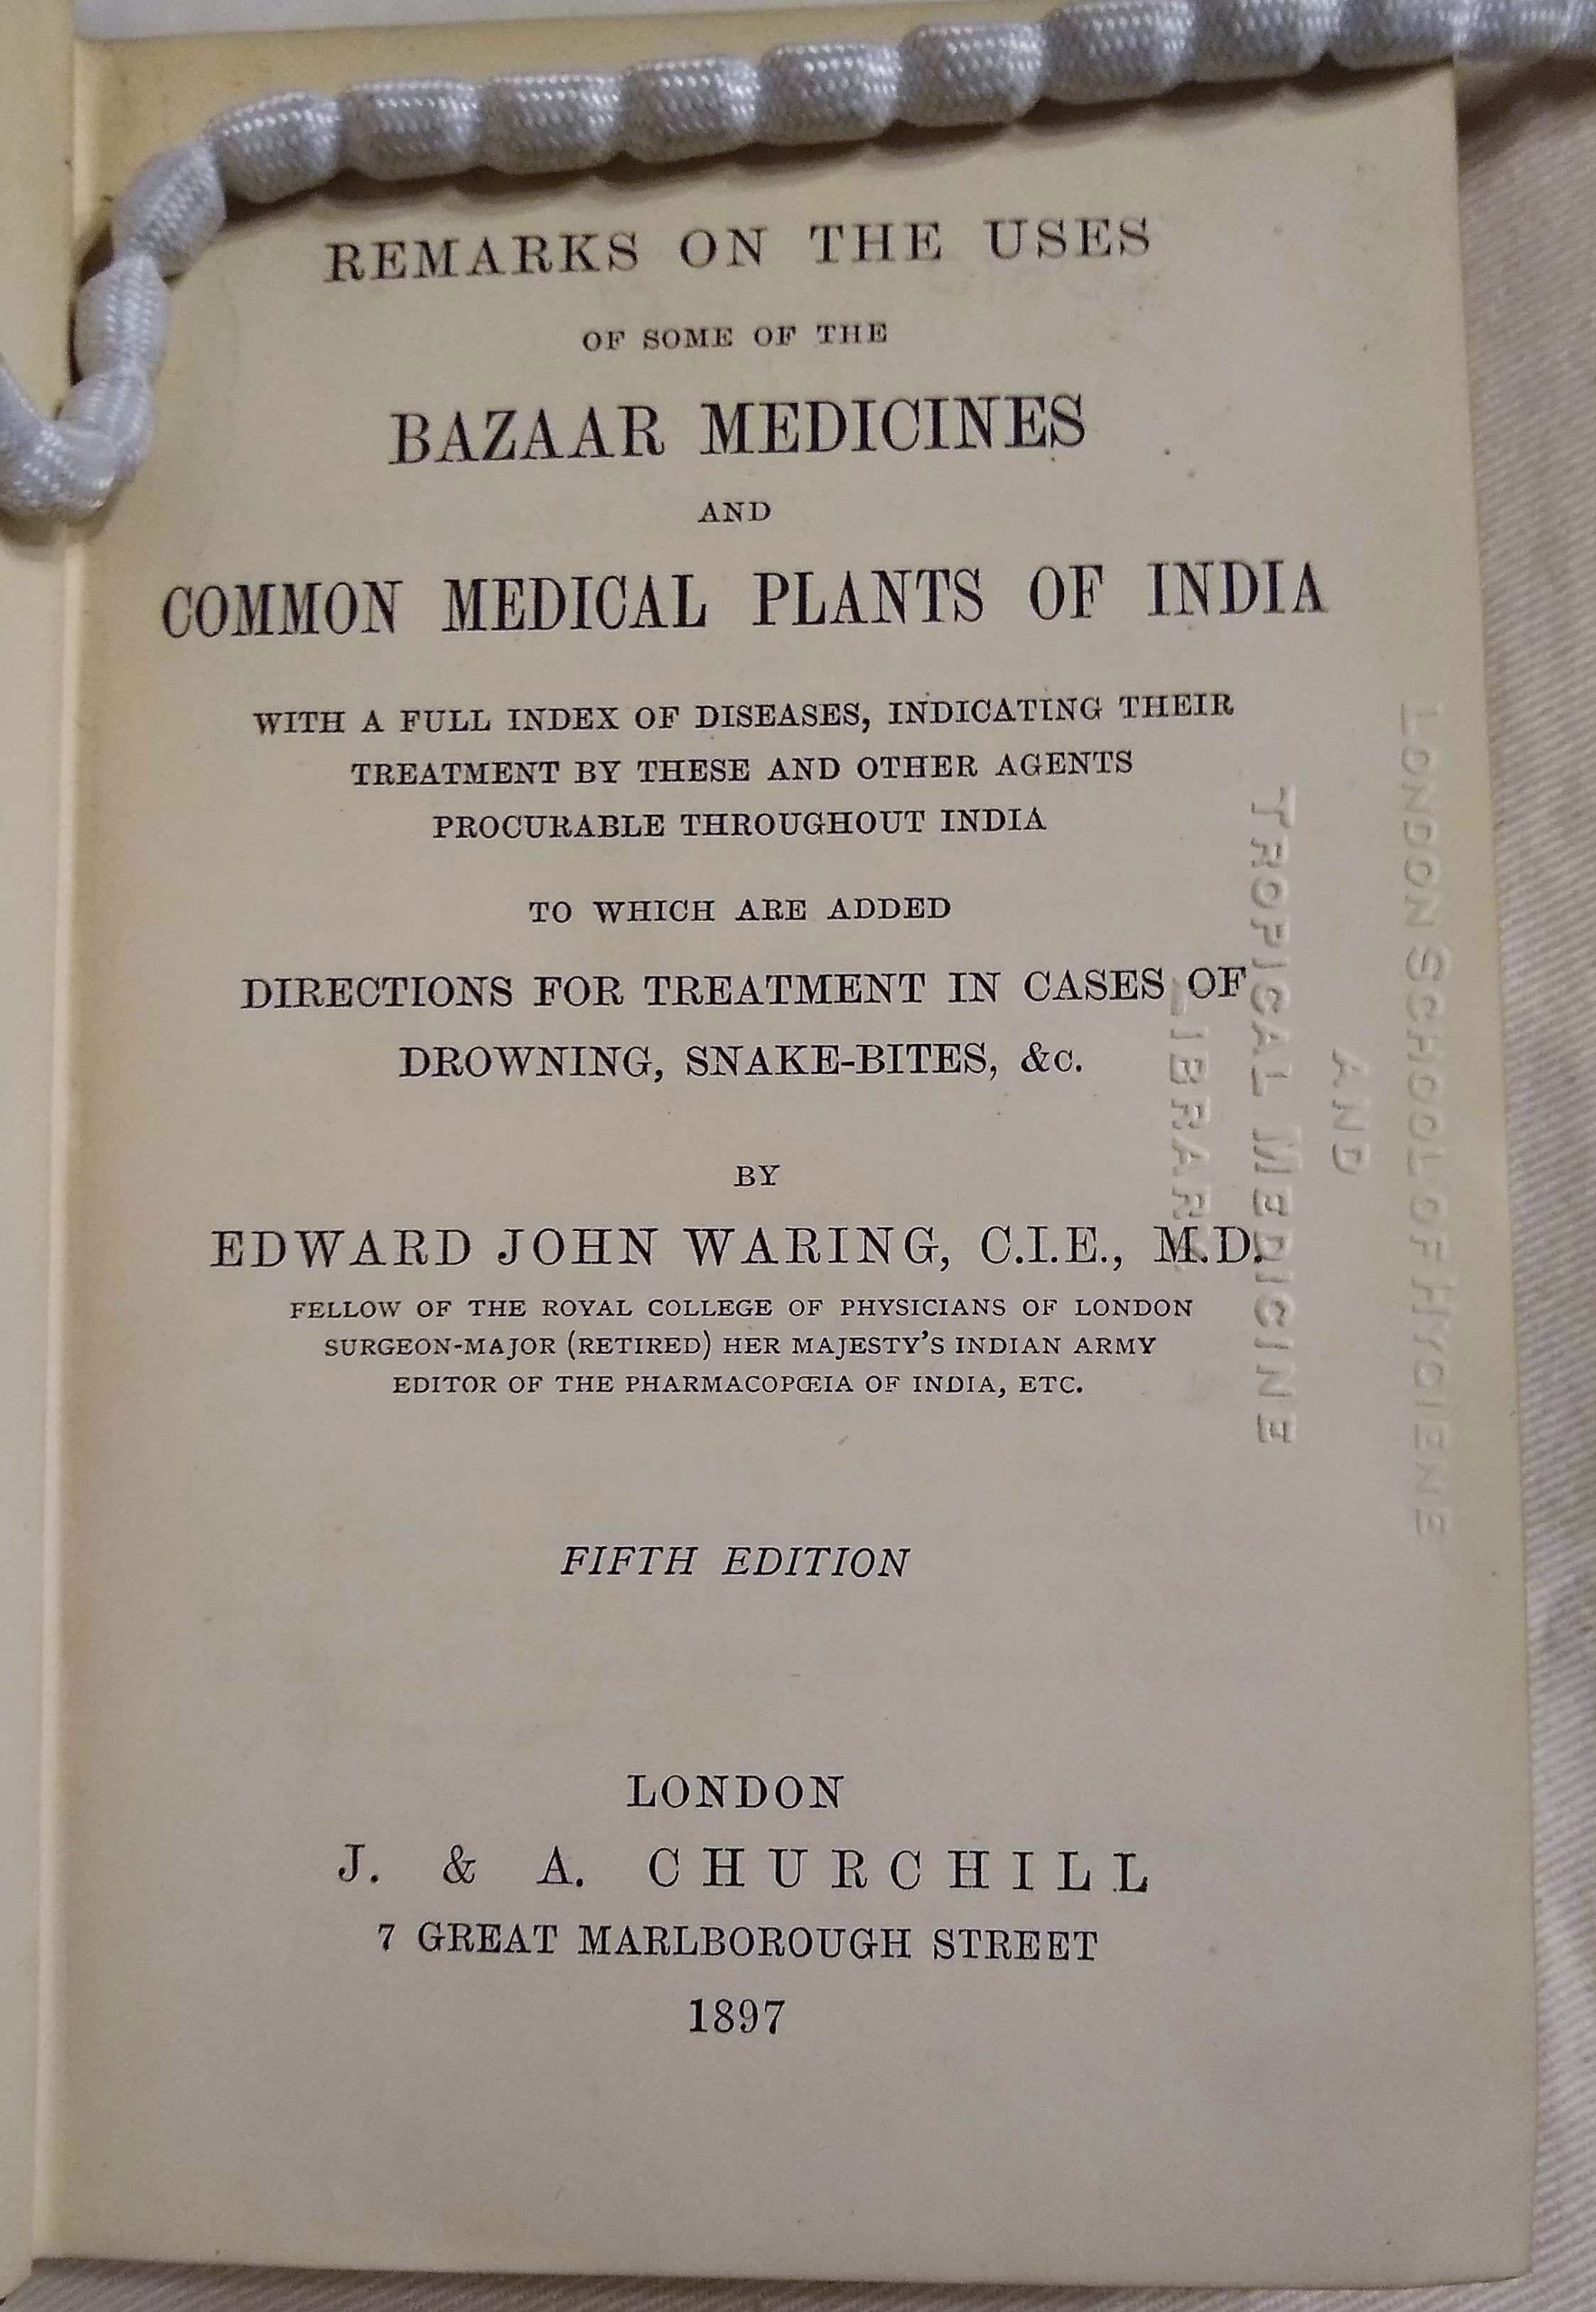 bazaar-medicines-of-india-2